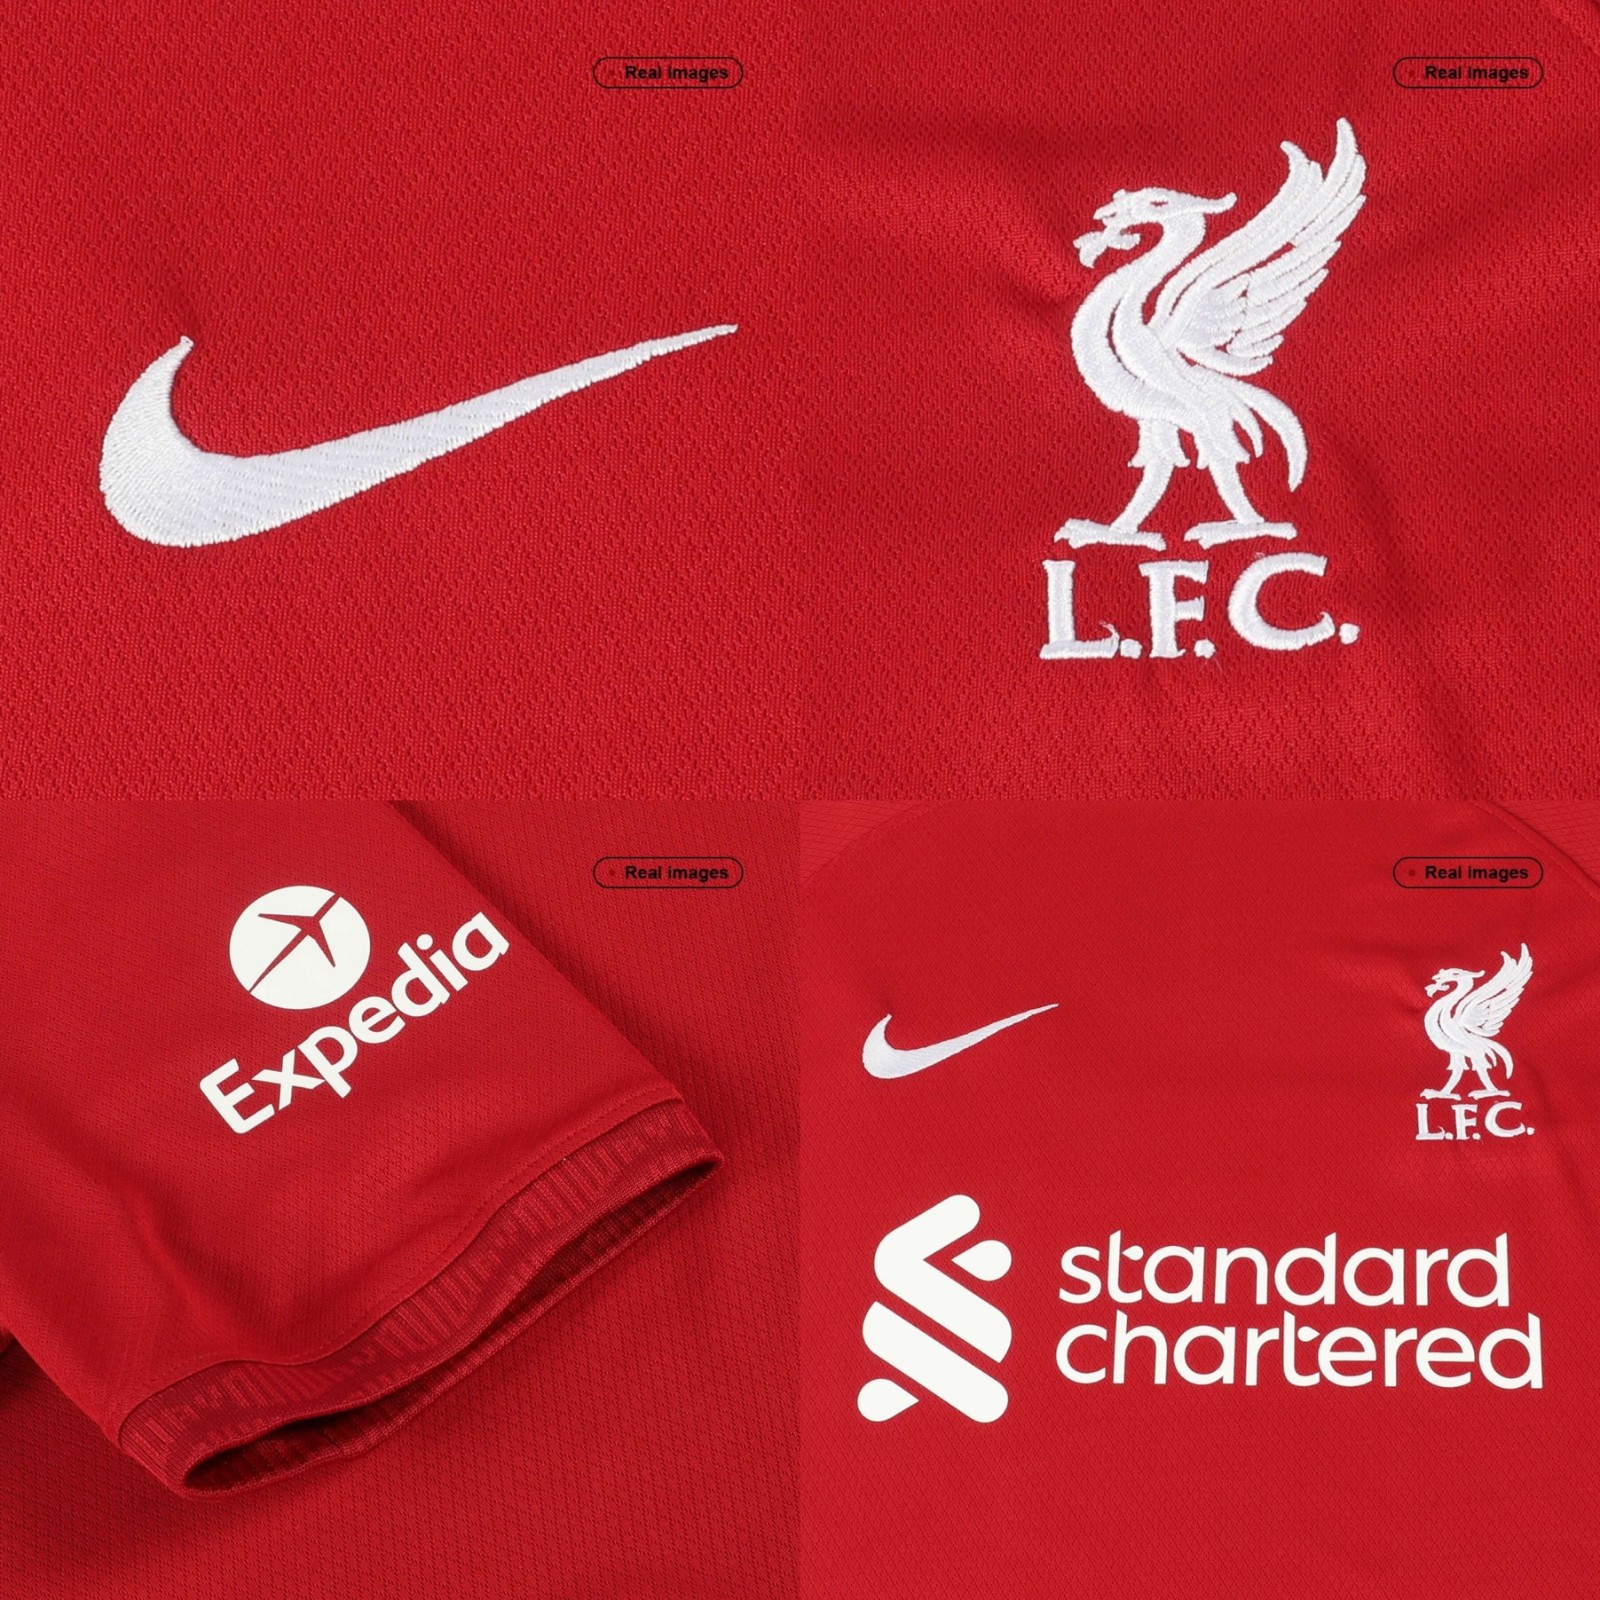 new Liverpool 22/23 jersey